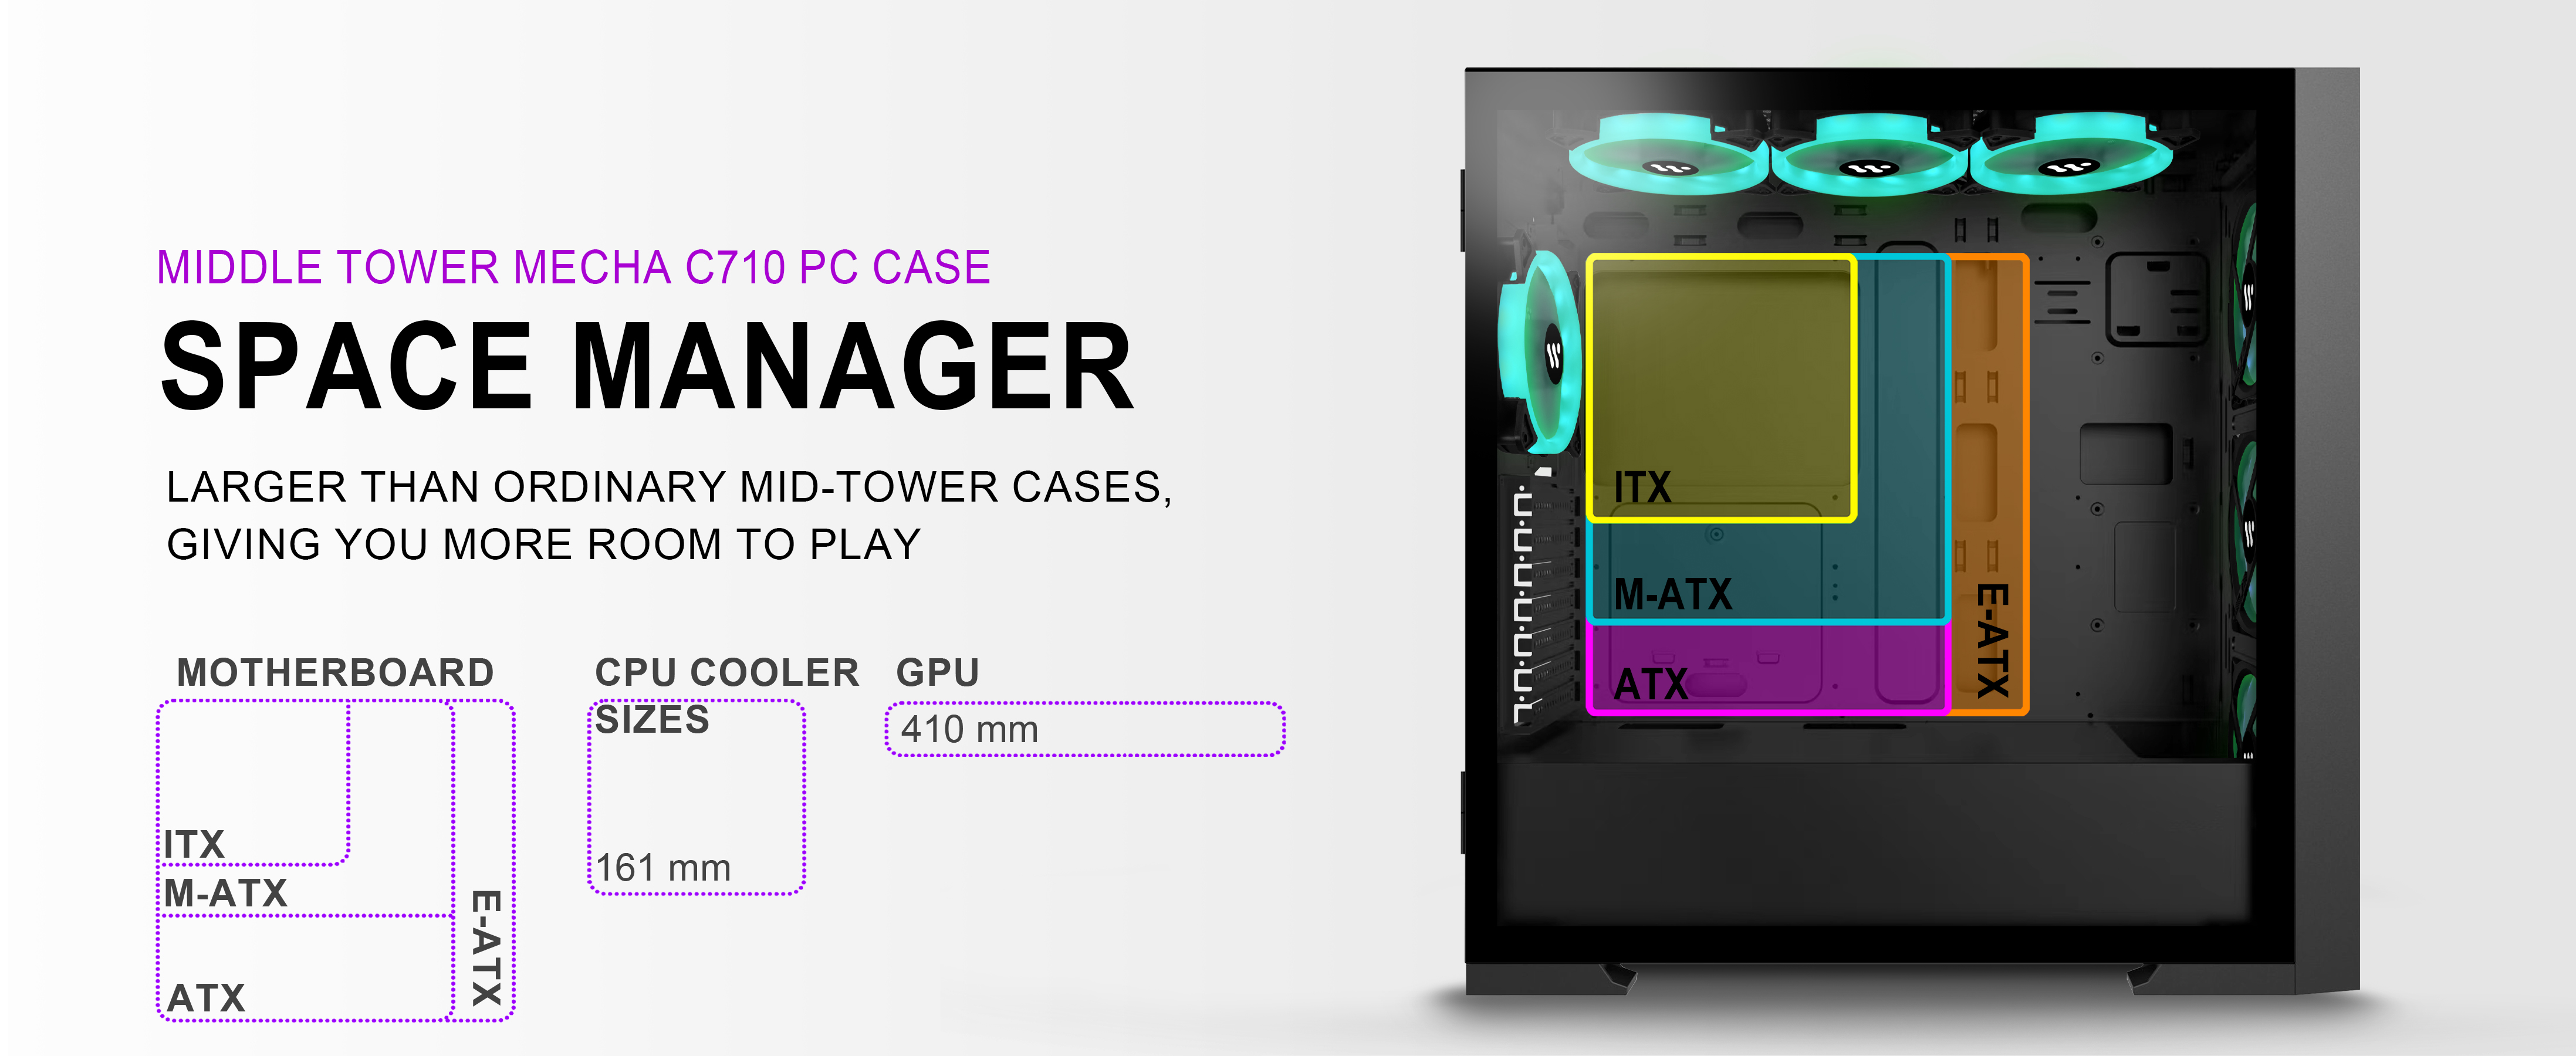 KEDIERS PC Case Pre-Install 7 PWM ARGB Cases Fans, E-ATX Mid Tower